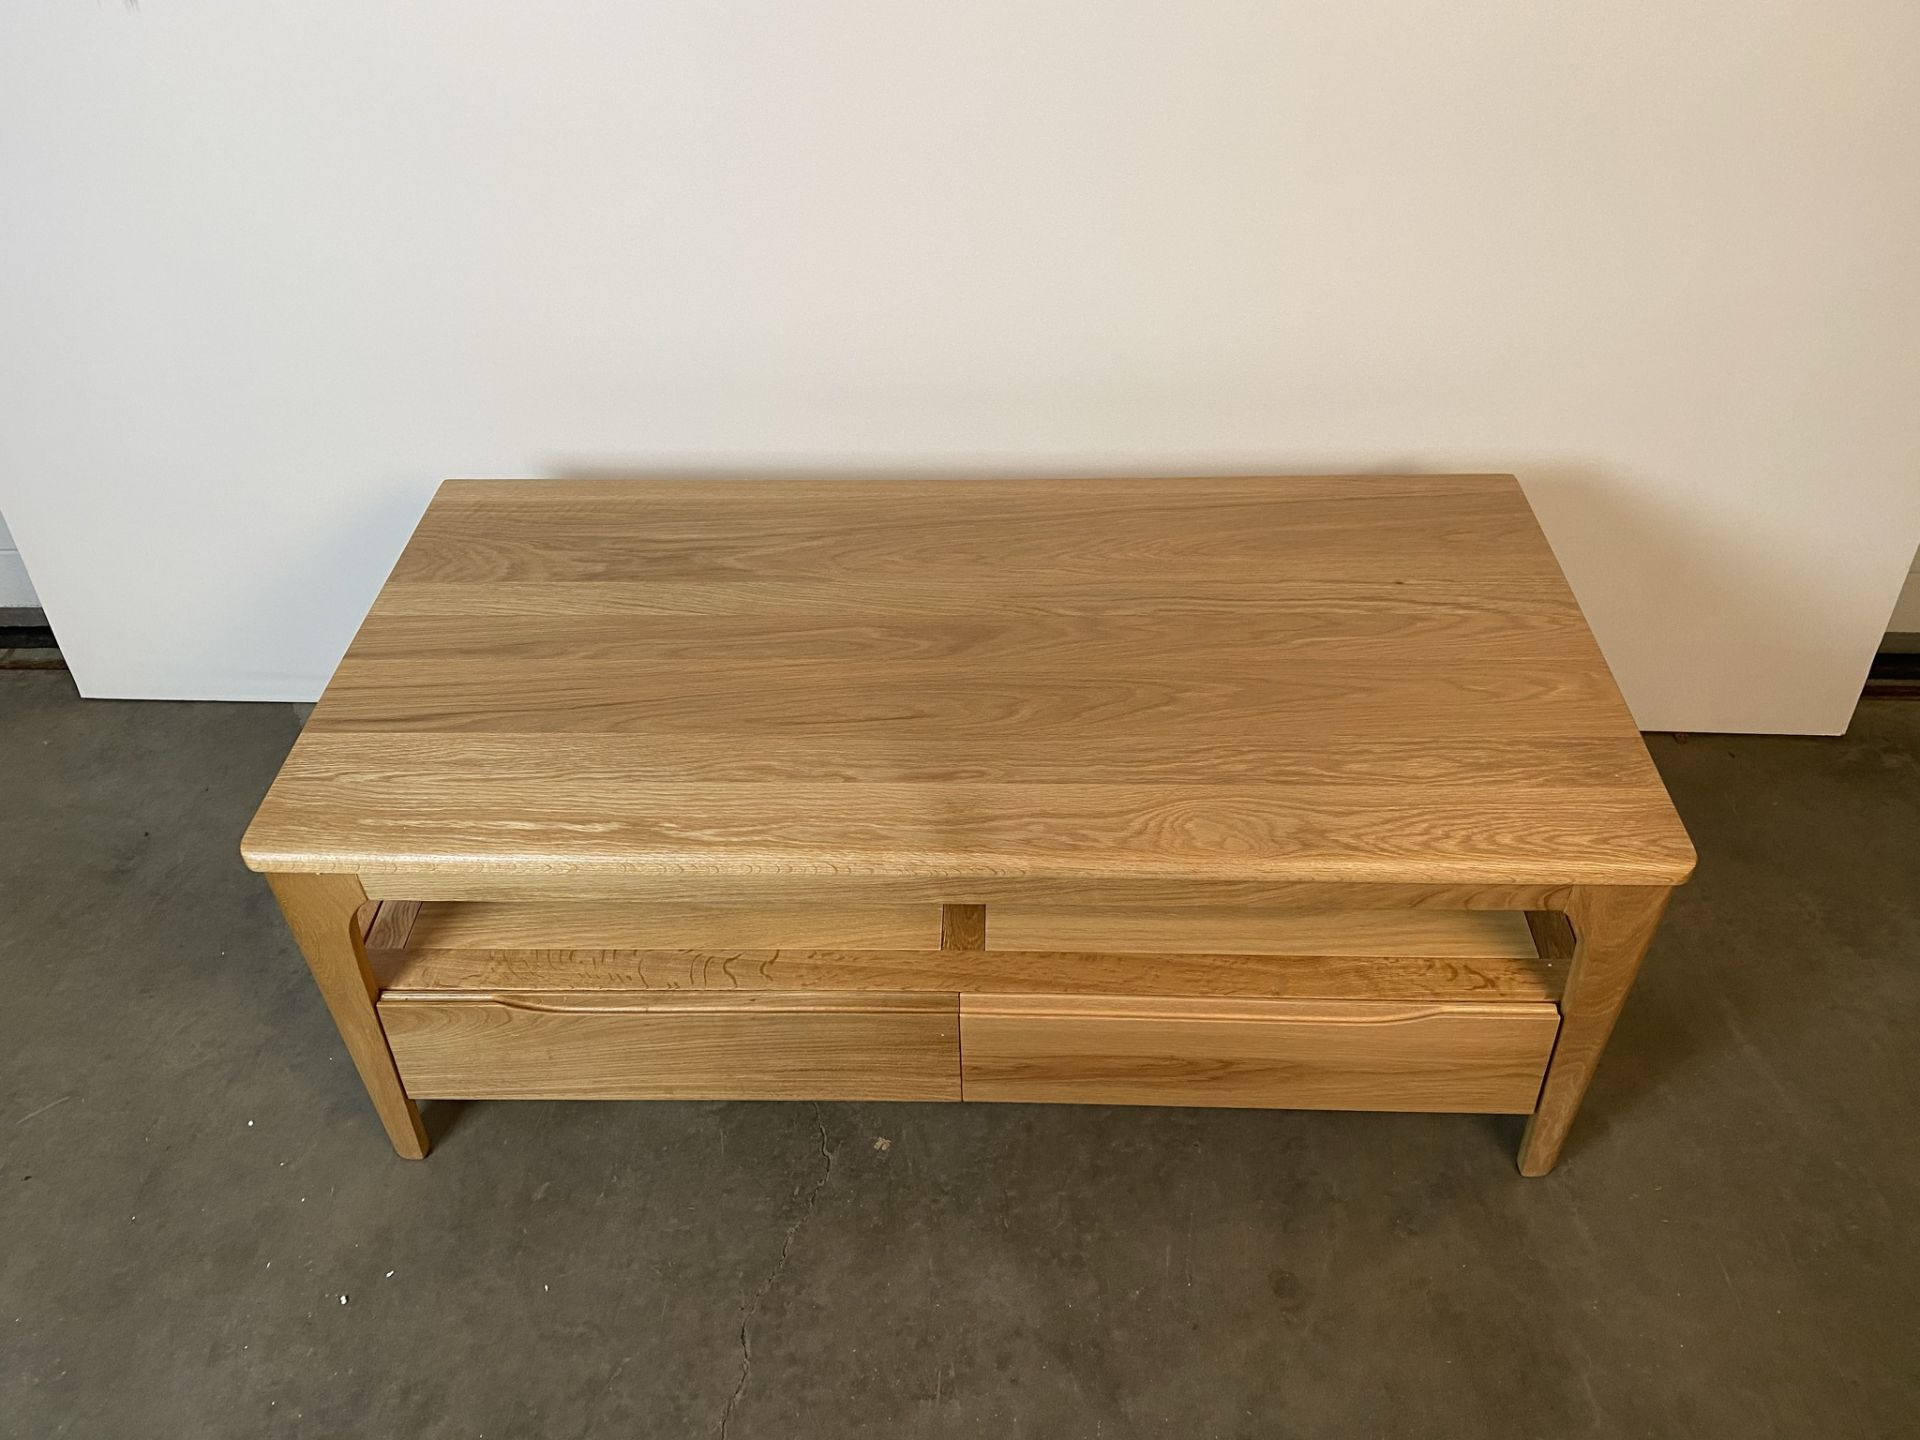 An Solid Oak + Phoenix 4 drawer coffee table - 120cm x 60cm x 45 cm - Image 4 of 10